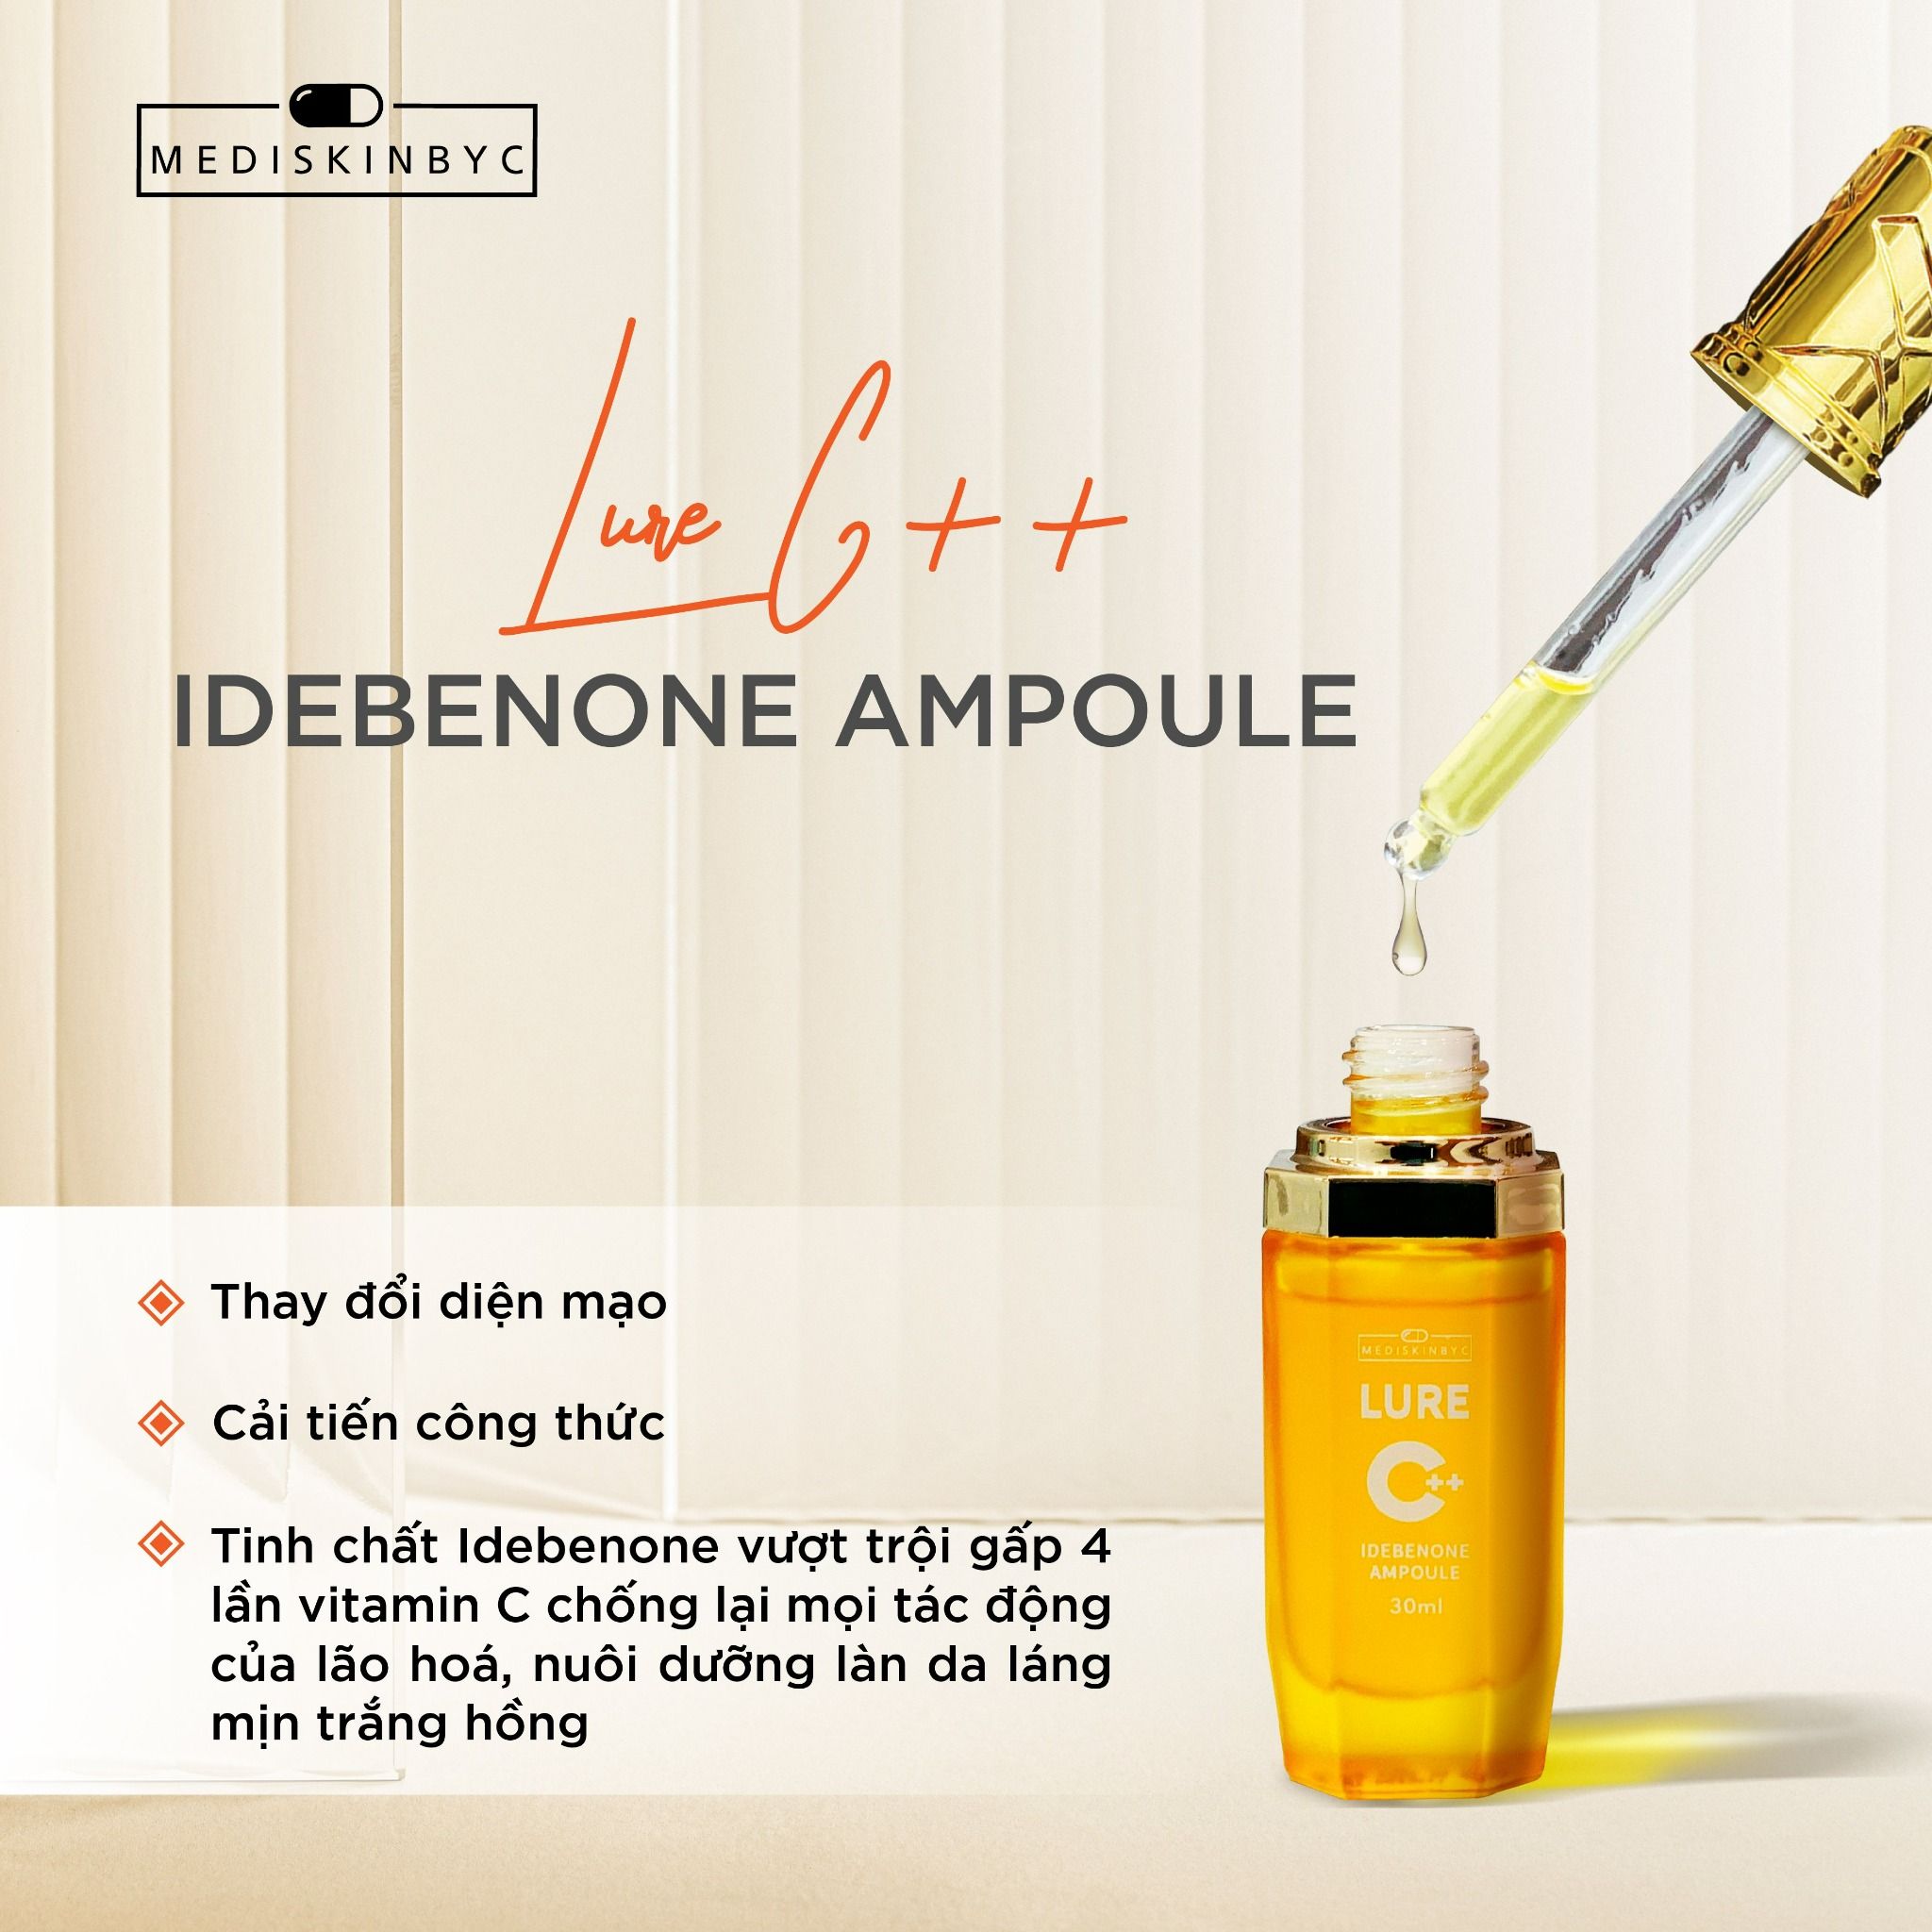  Lure C++ Idebenone Ampoule siêu chất chống lão hóa 30ml 